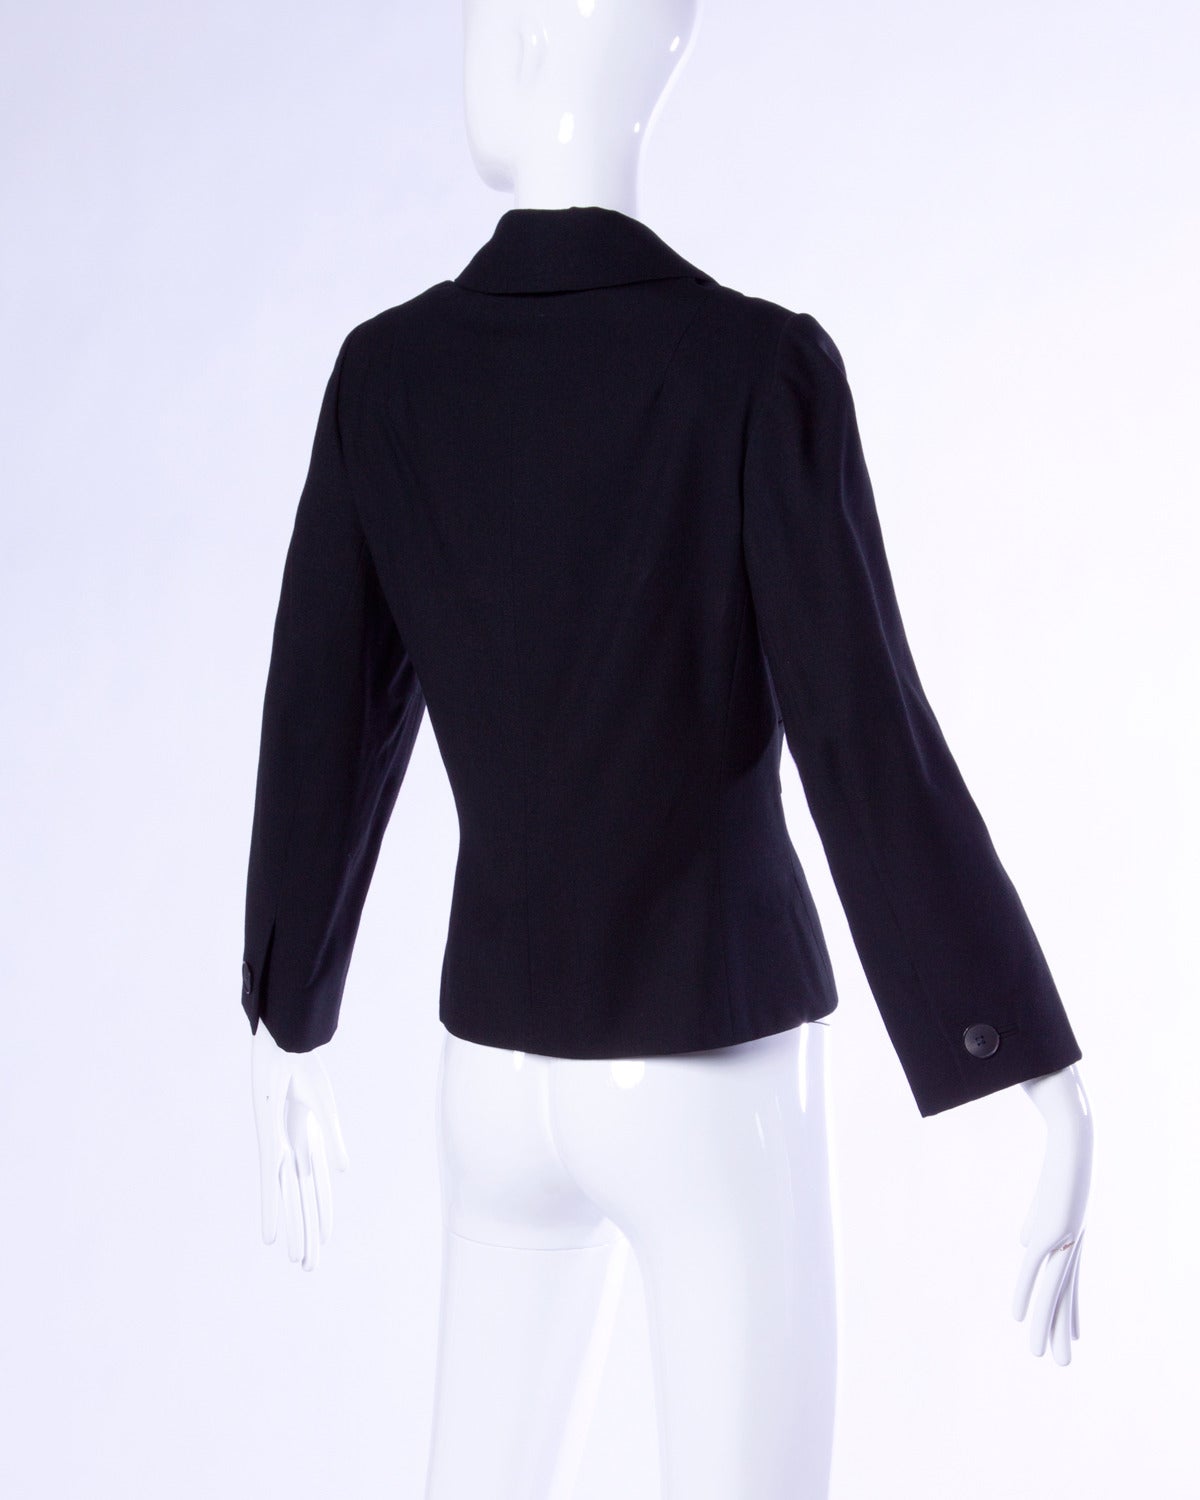 Women's Pristine Irene Lentz Vintage 1940s 40s Black Wool Blazer or Suit Jacket